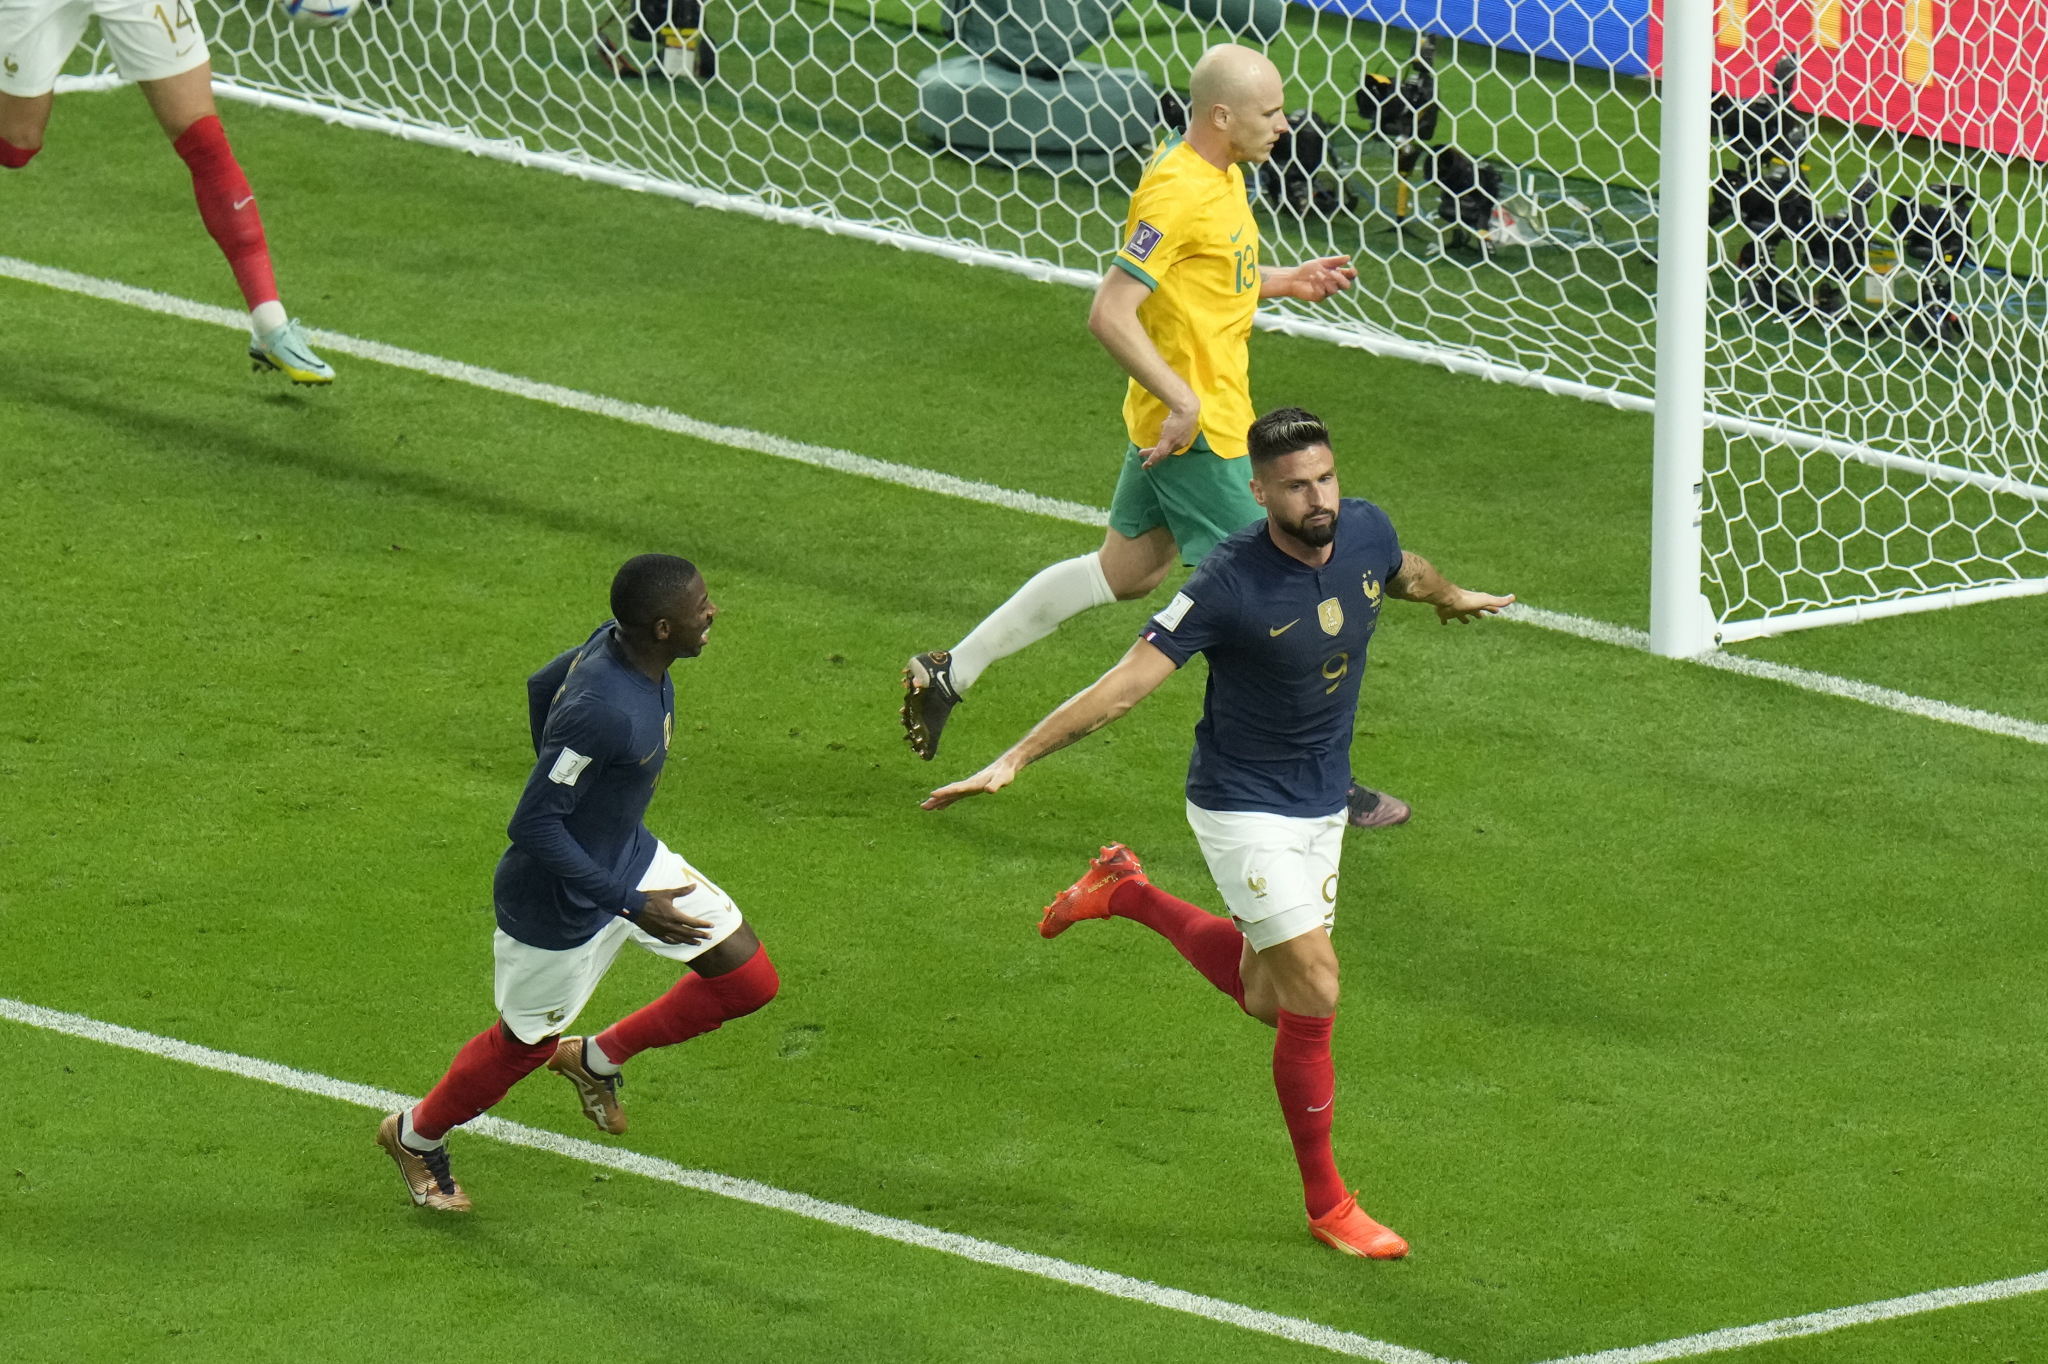 NE ŽELI DA SE ZAUSTAVI Oborio rekord na Svetskom prvenstvu, a sada je pred novim ugovorom u 37. godini